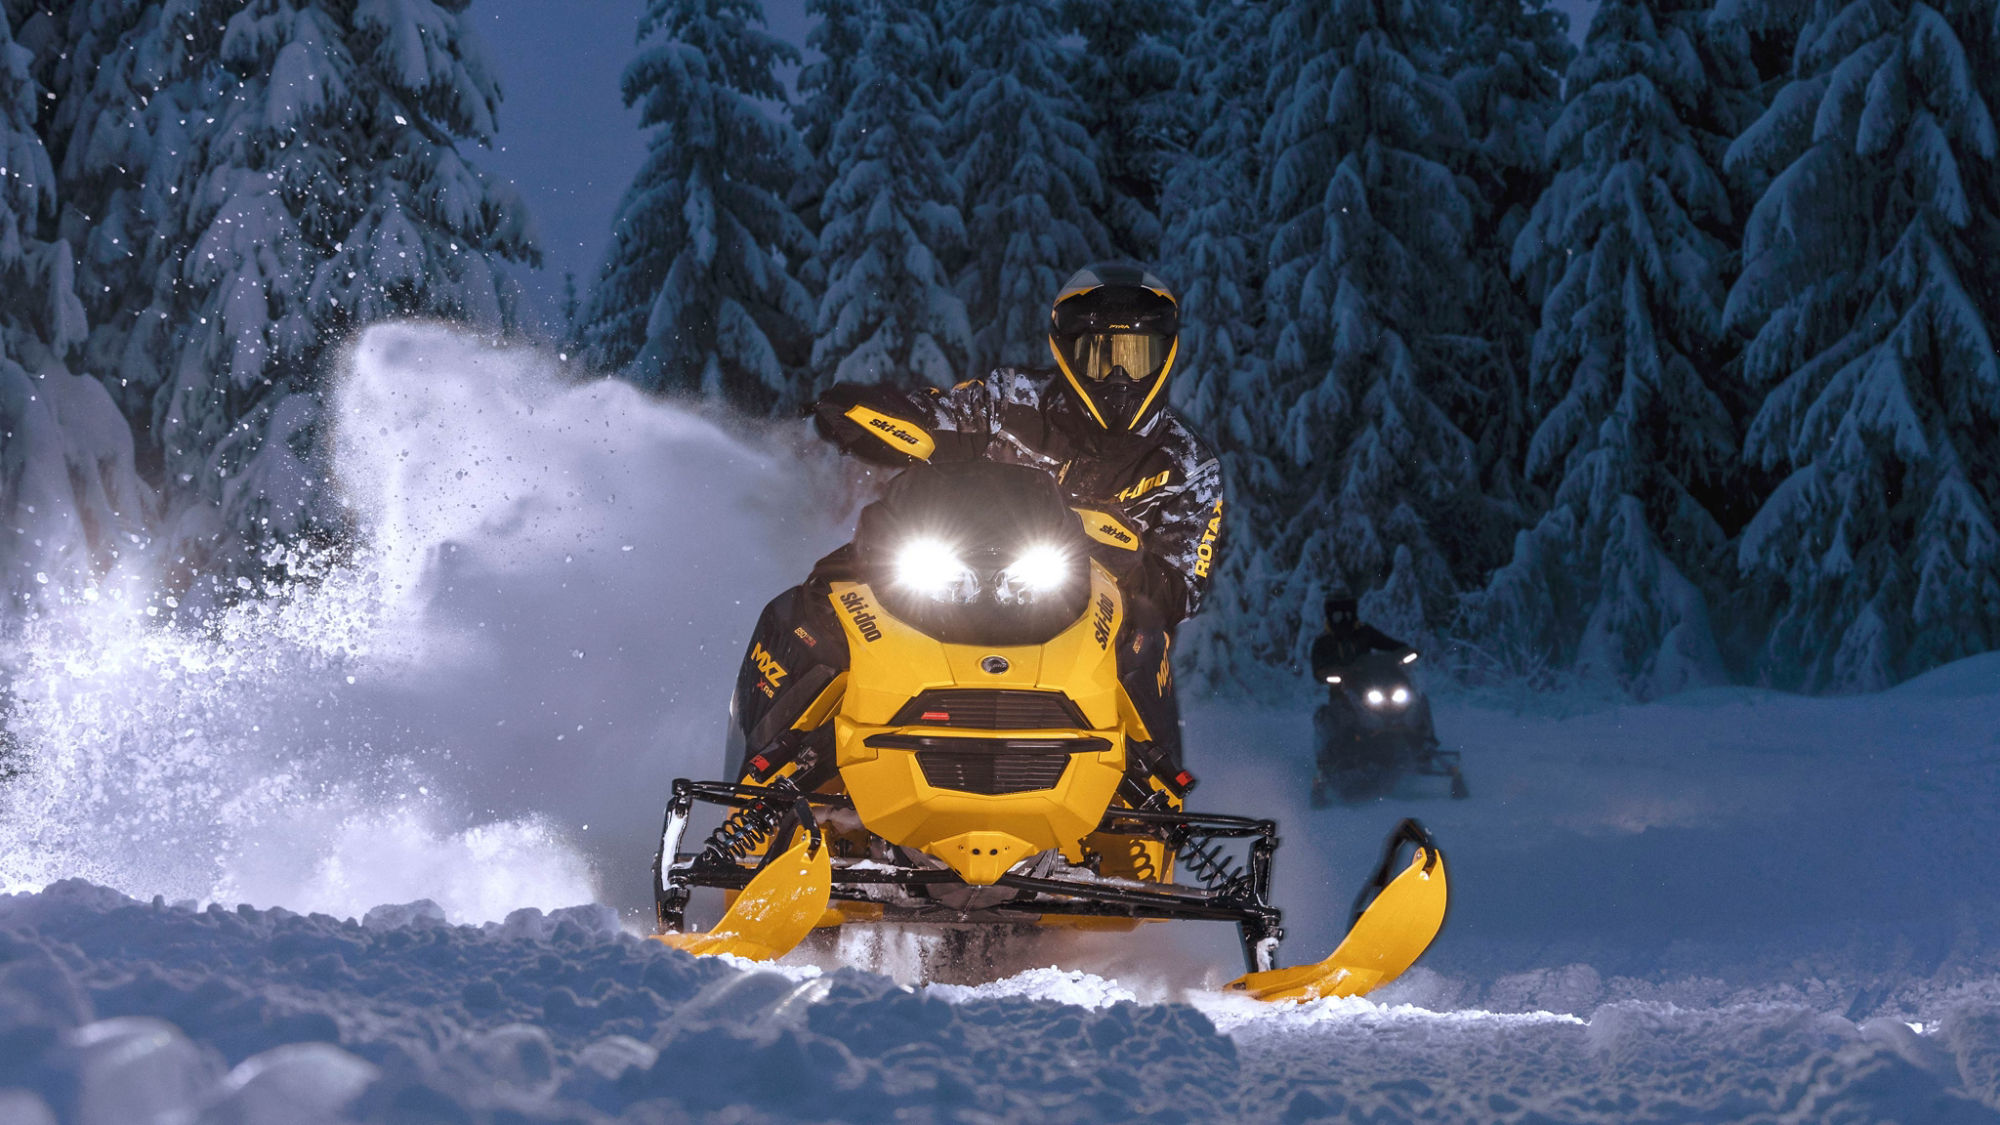 Ski-Doo MXZ 2025 snowmobile on a night ride